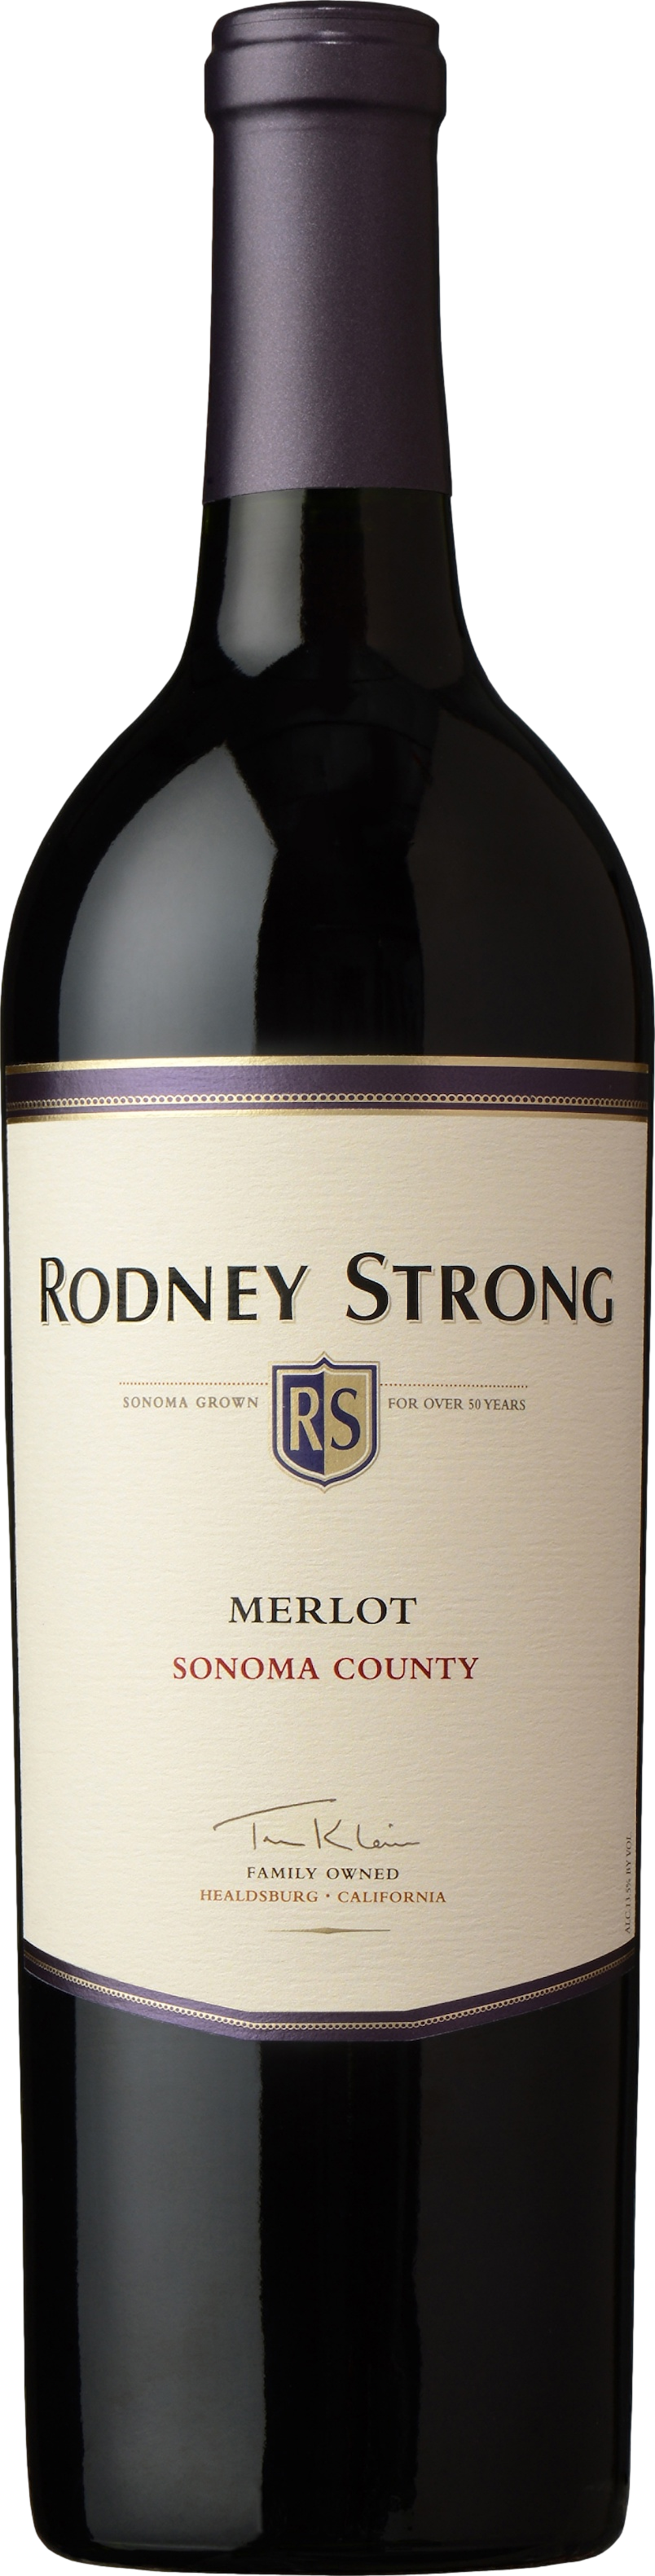 Rodney Strong Merlot 2018